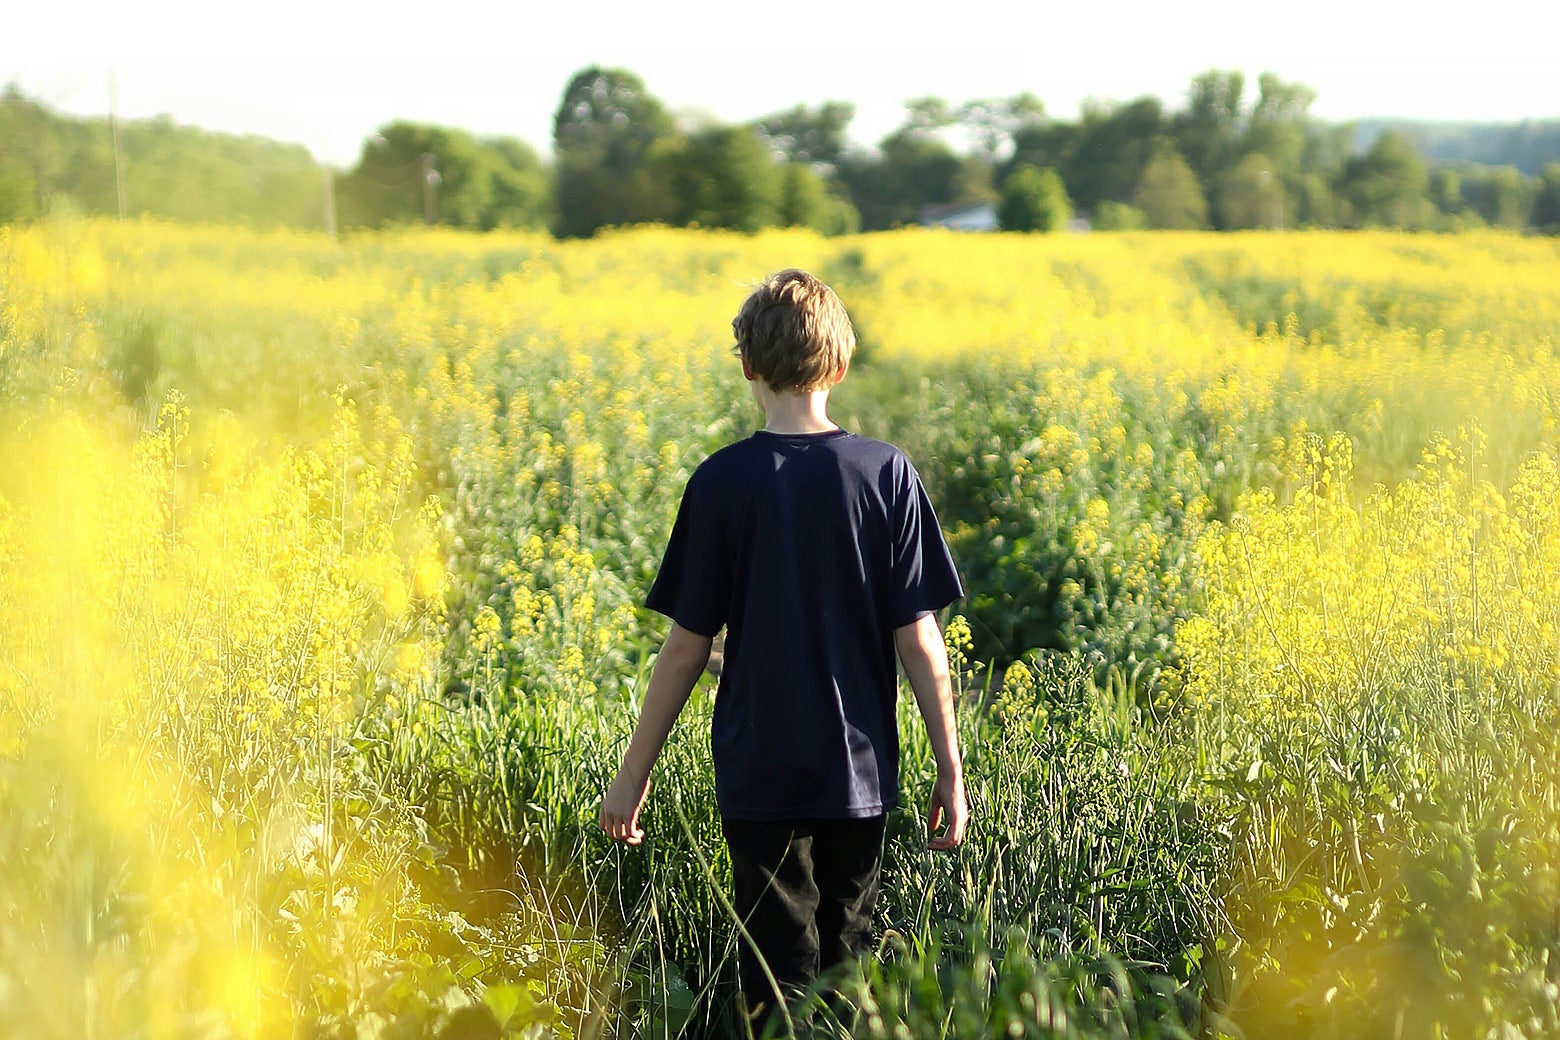 A teen walking alone through a field of flowers.